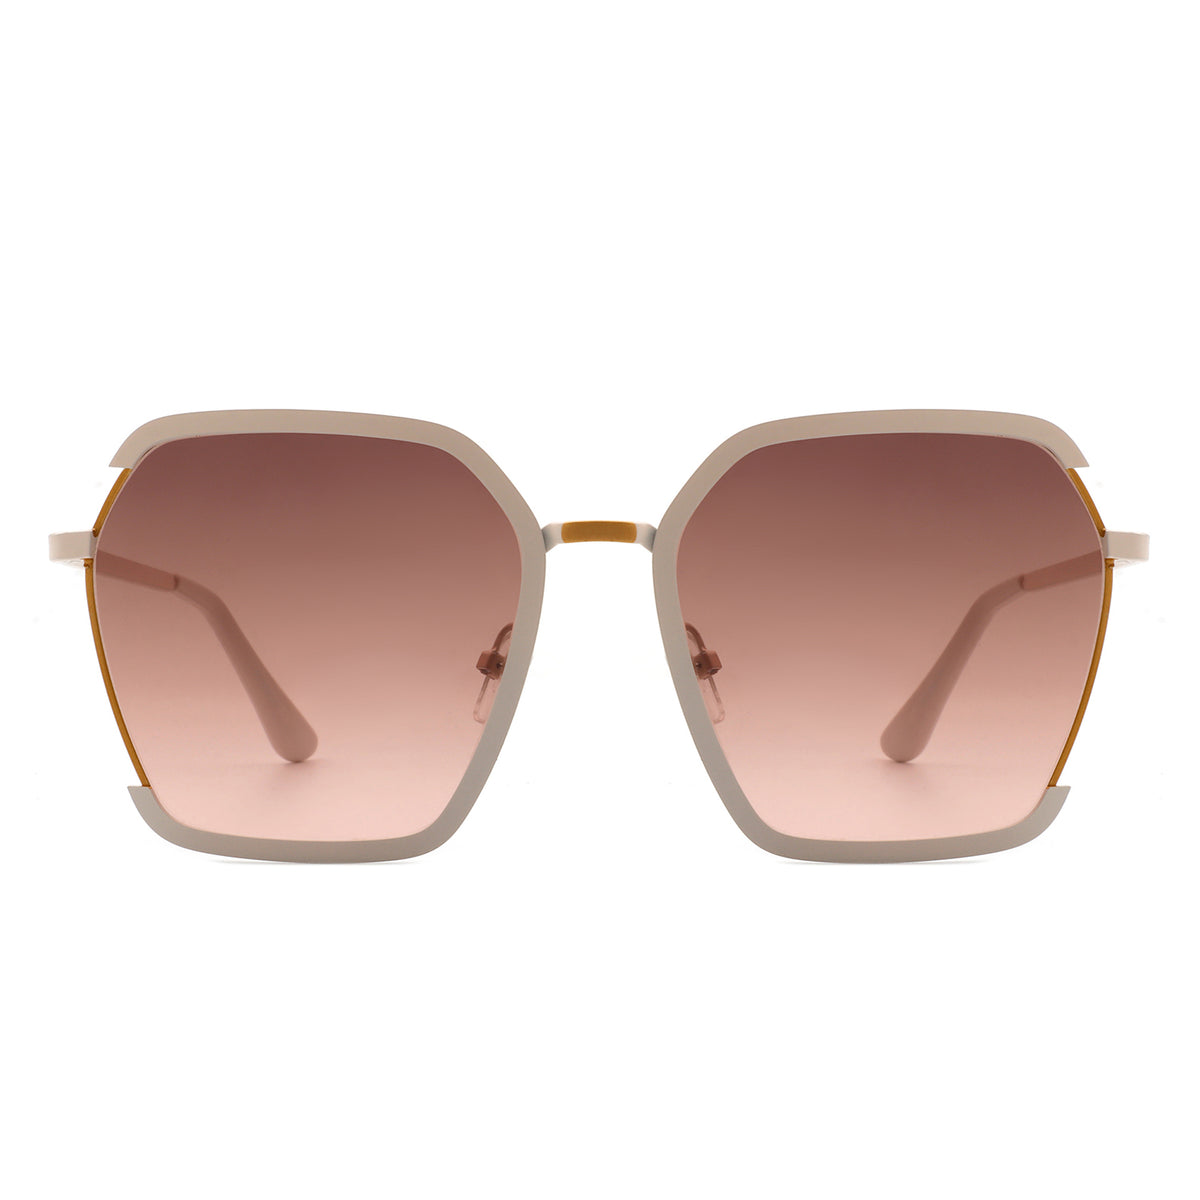 HJ1001 - Oversize Half Frame Square Fashion Women Sunglasses